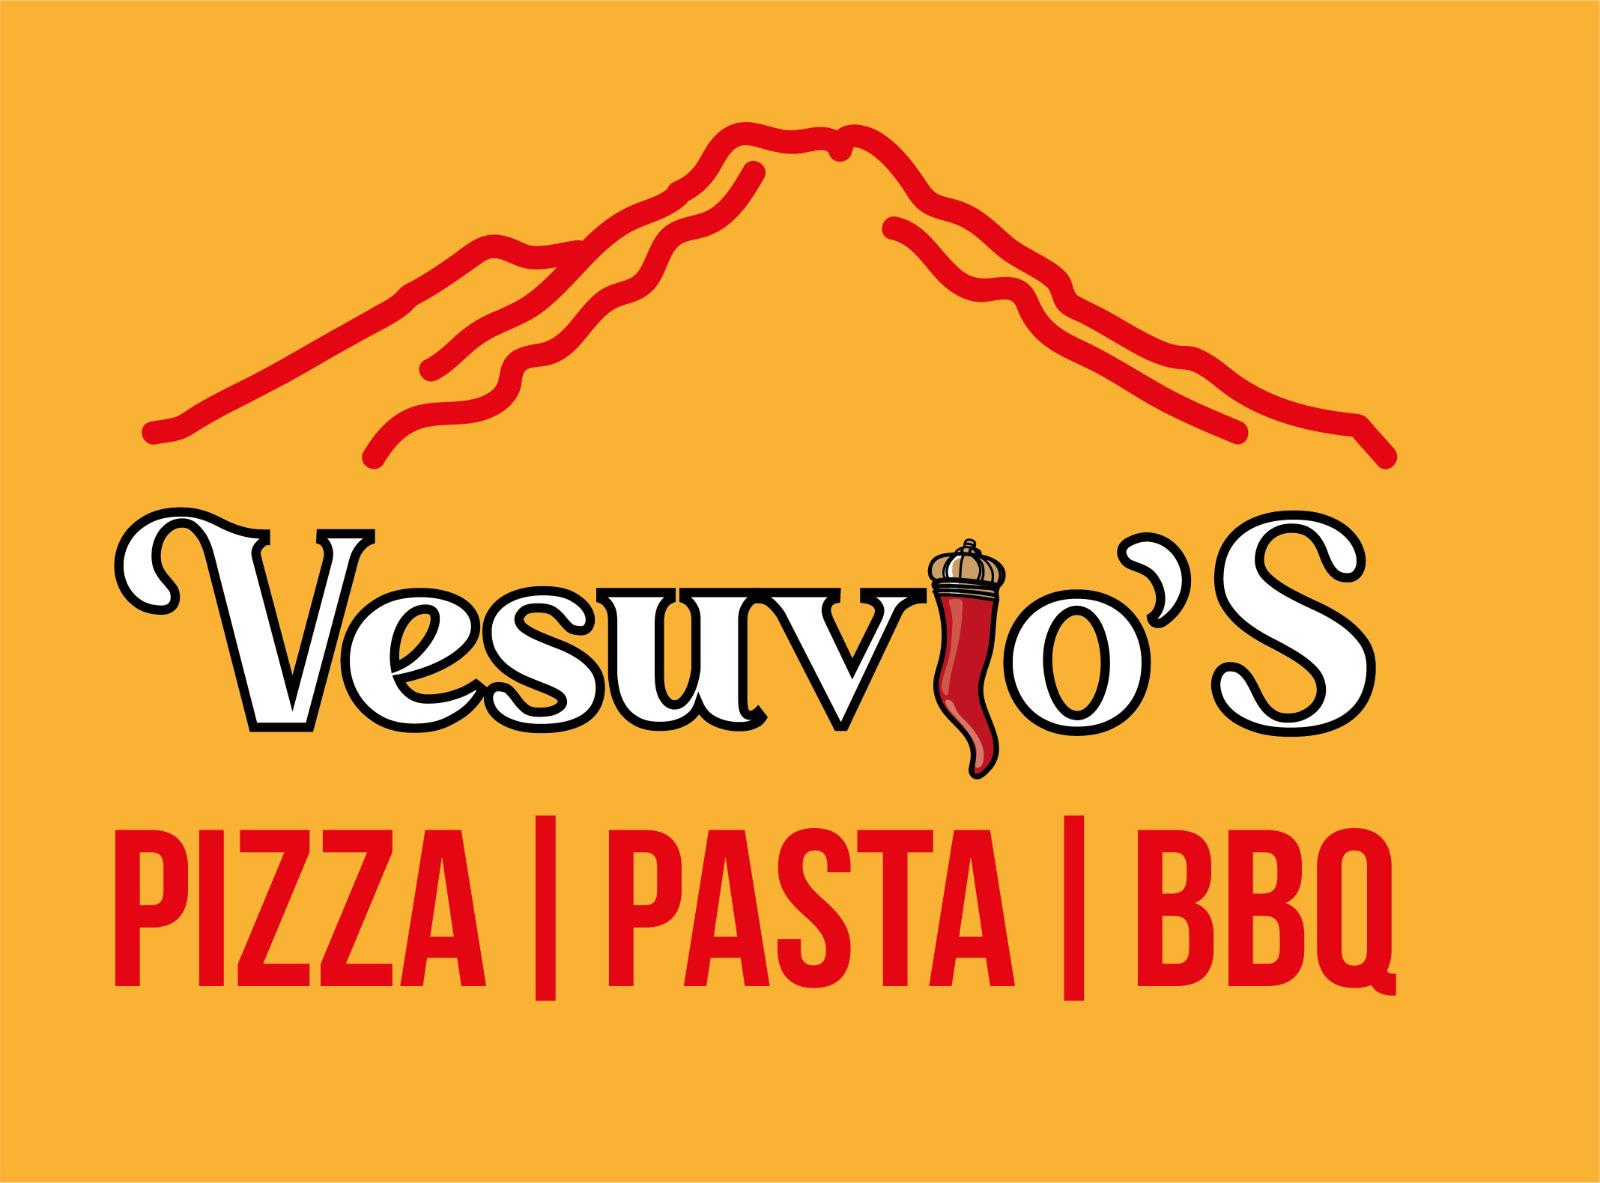 Vesuvios red text on yellow field Pizza Pasta & BBQ